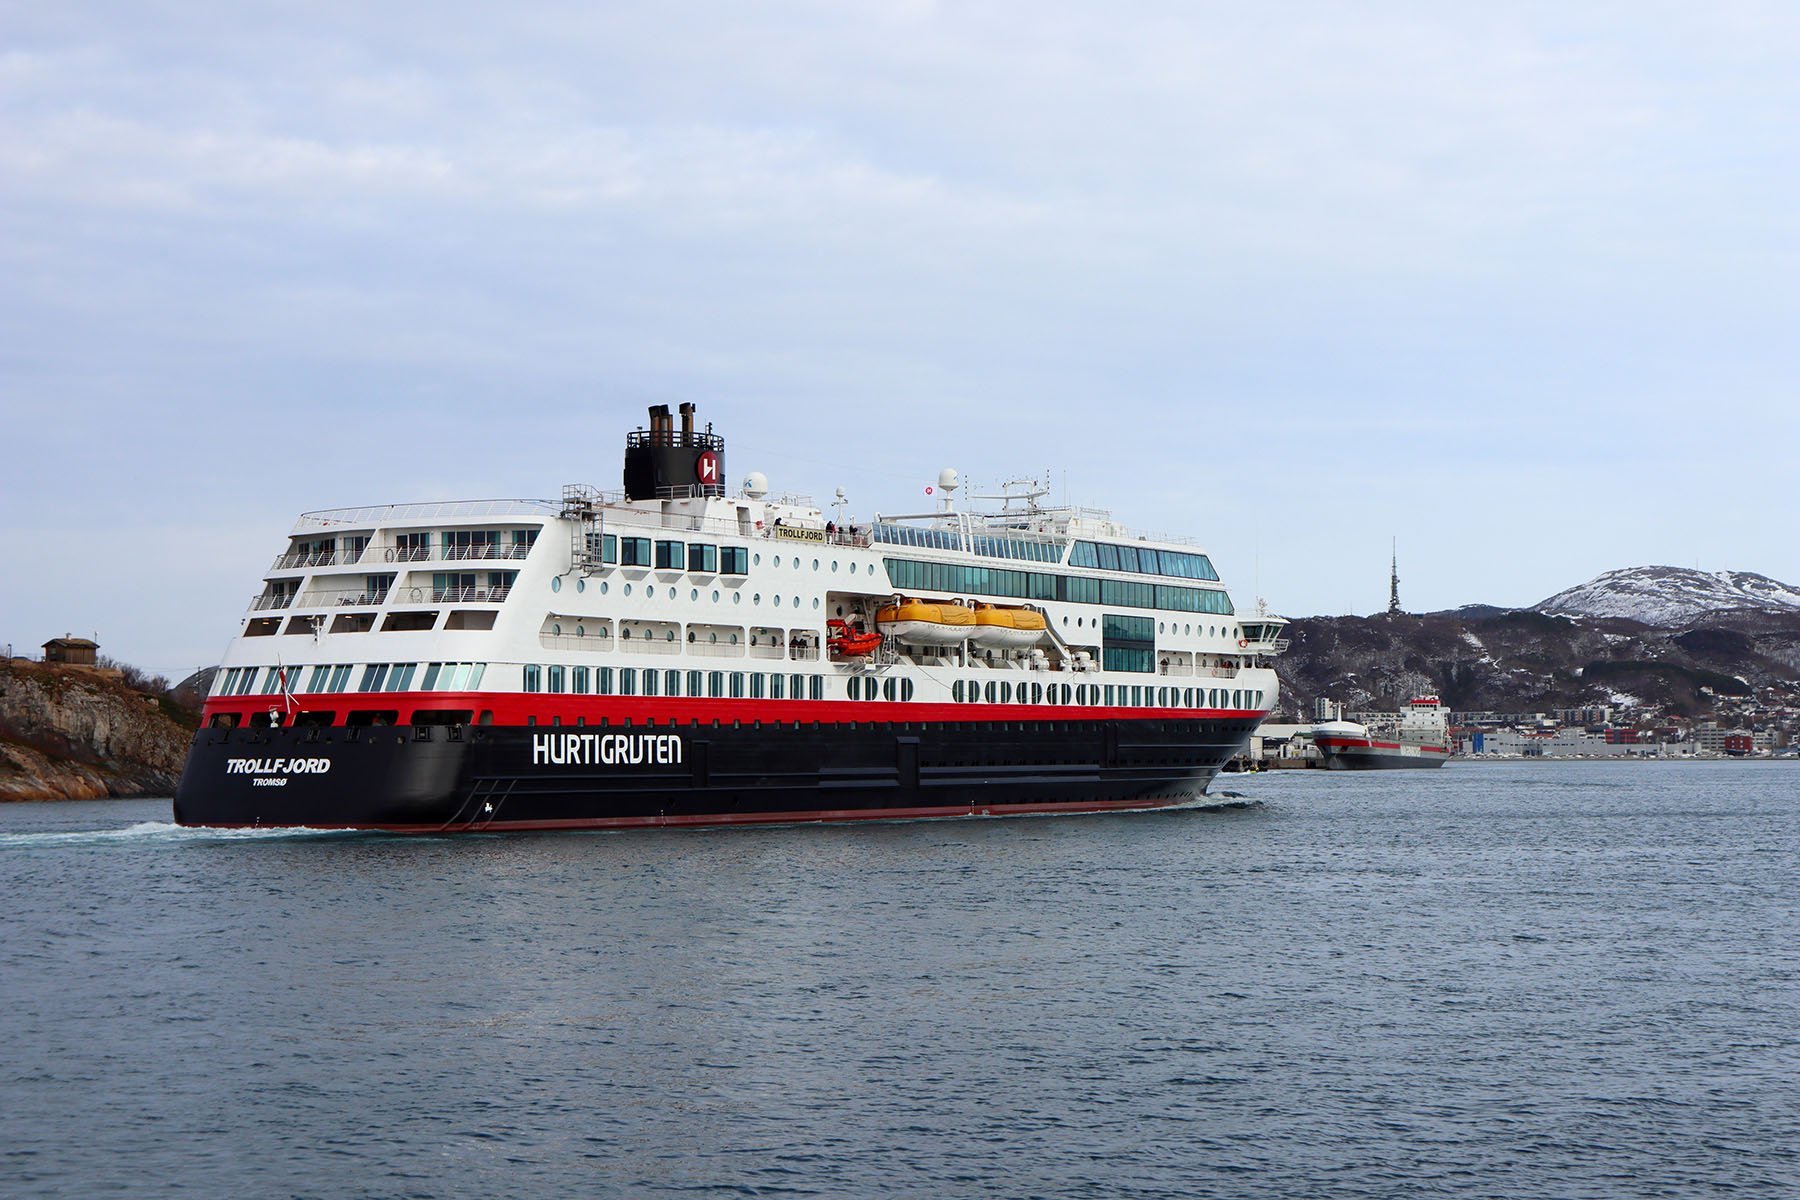 Hurtigruten vessel MS Trollfjord. Photo: Leif Skaue / Shutterstock.com